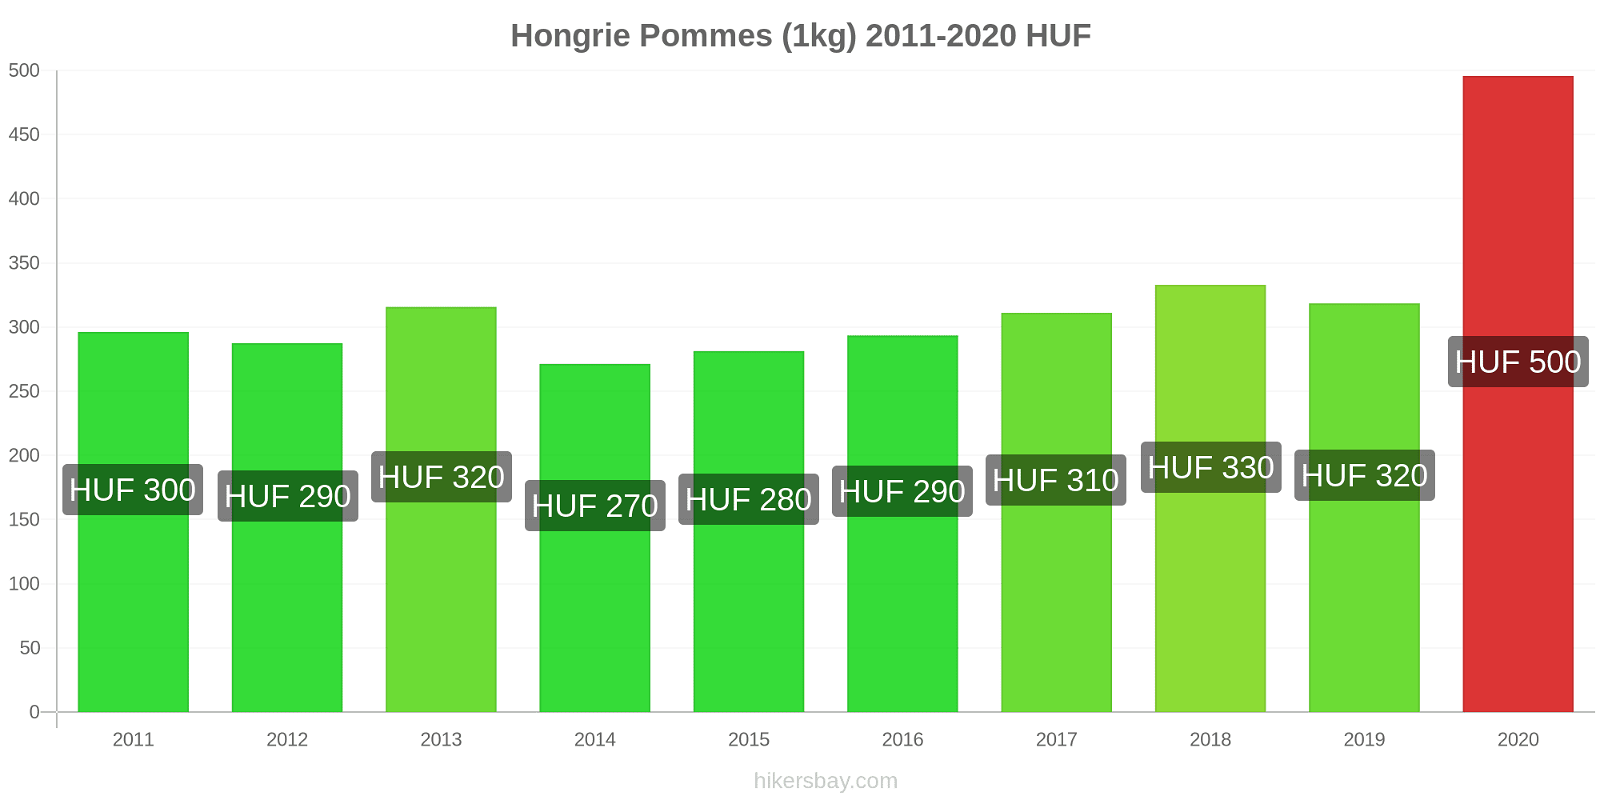 Hongrie changements de prix Pommes (1kg) hikersbay.com